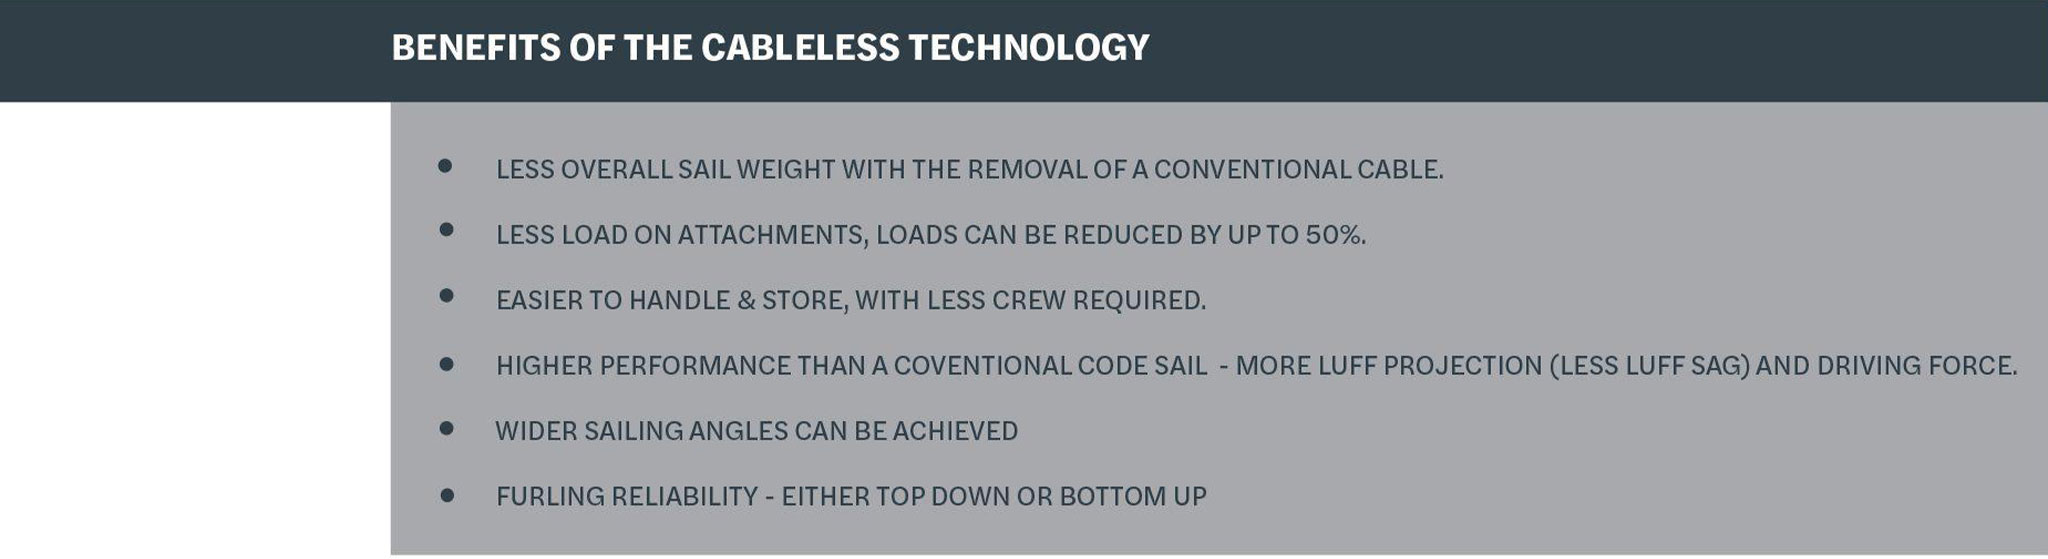 CABLELESS TECHNOLOGY